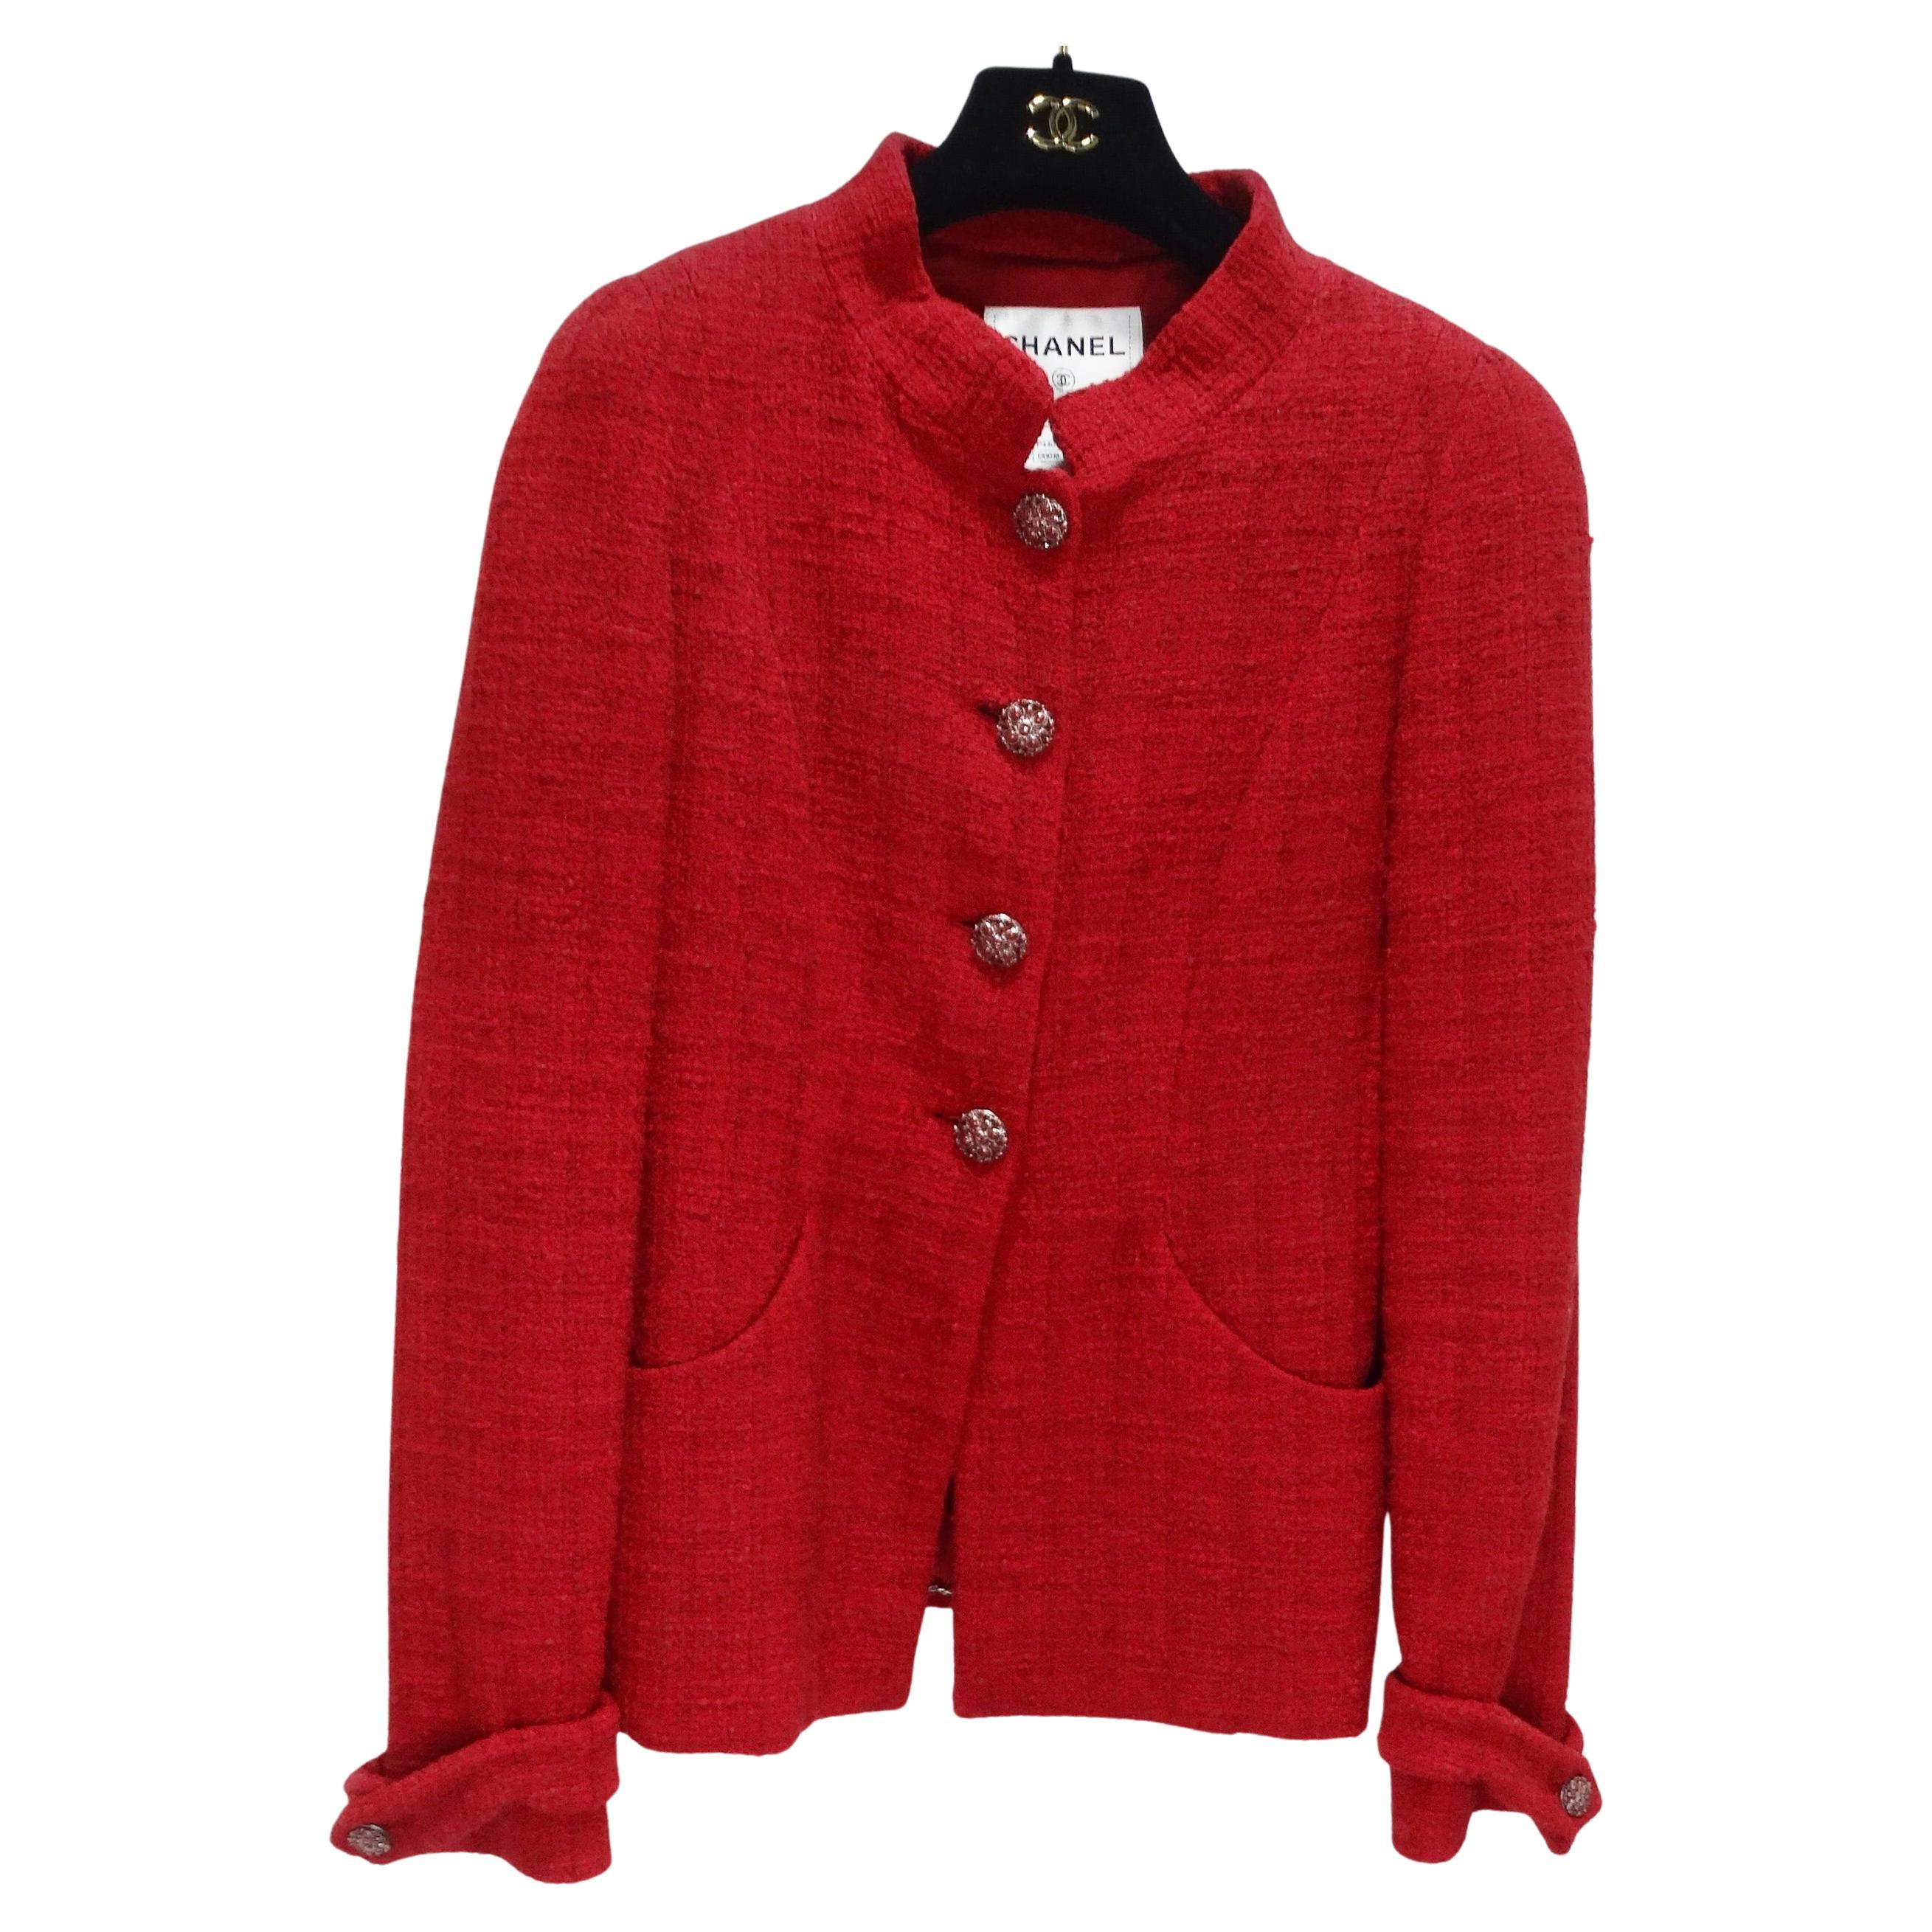 Chanel Tweed Jacket 2004 - 14 For Sale on 1stDibs